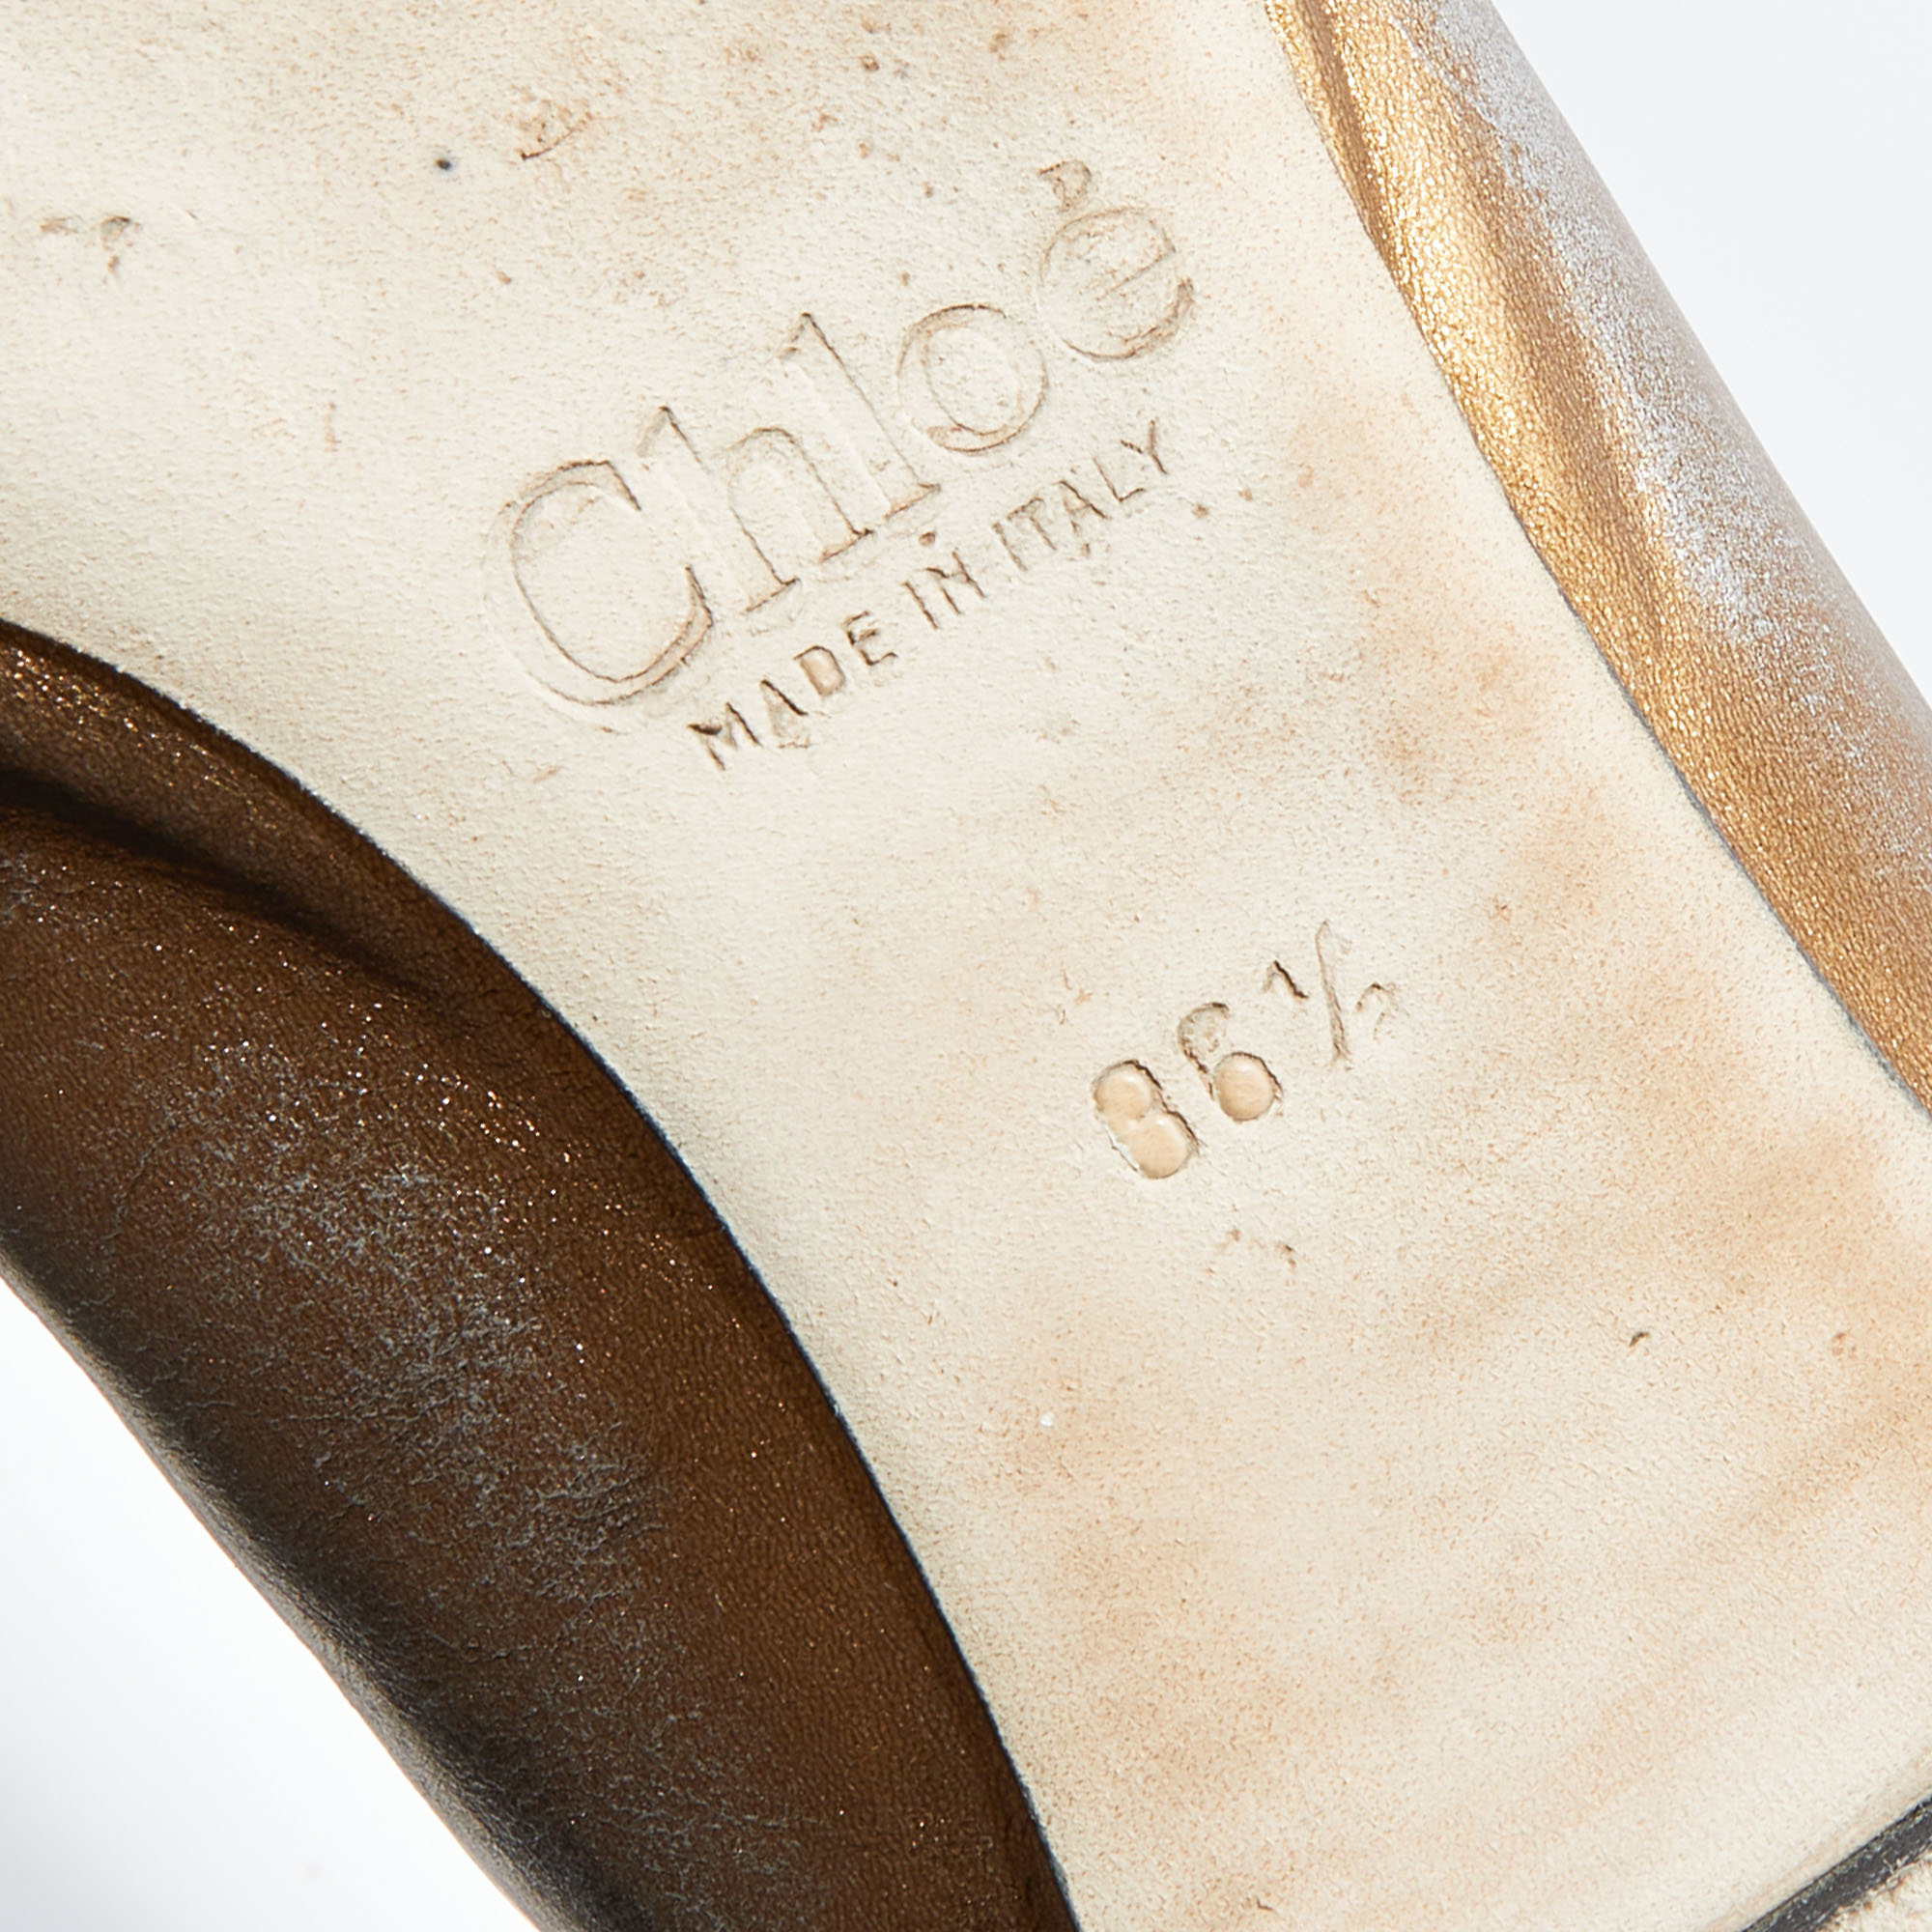 Chloe Gold Leather Lauren Scalloped Ballet Flats Size 36.5